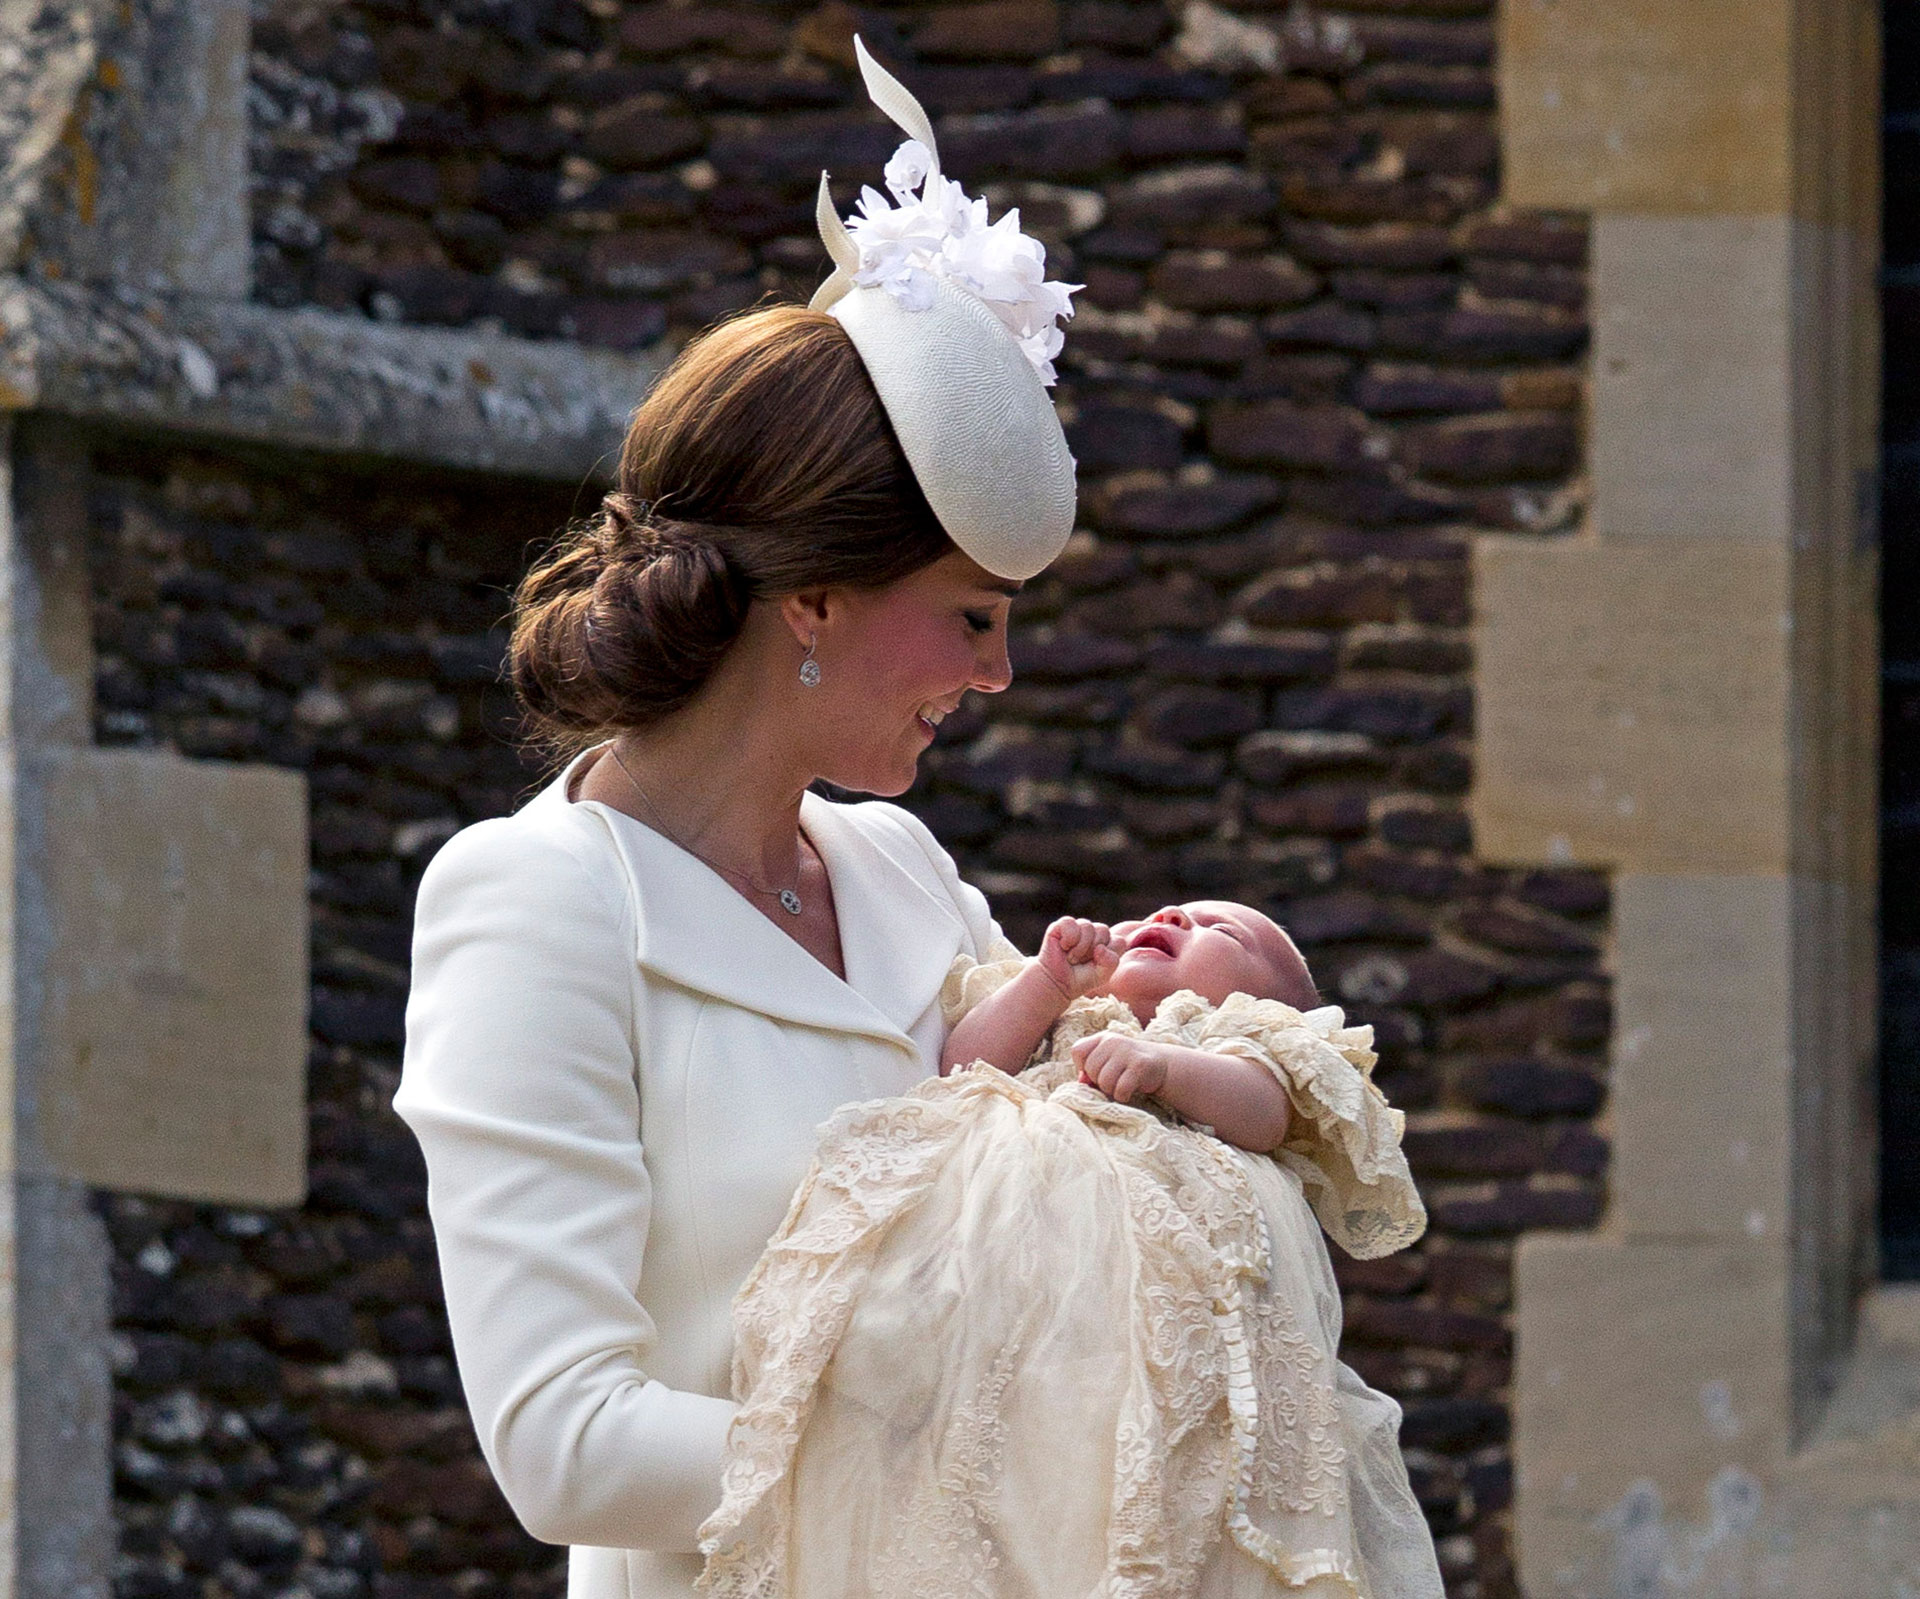 Princess Charlotte and Duchess Catherine